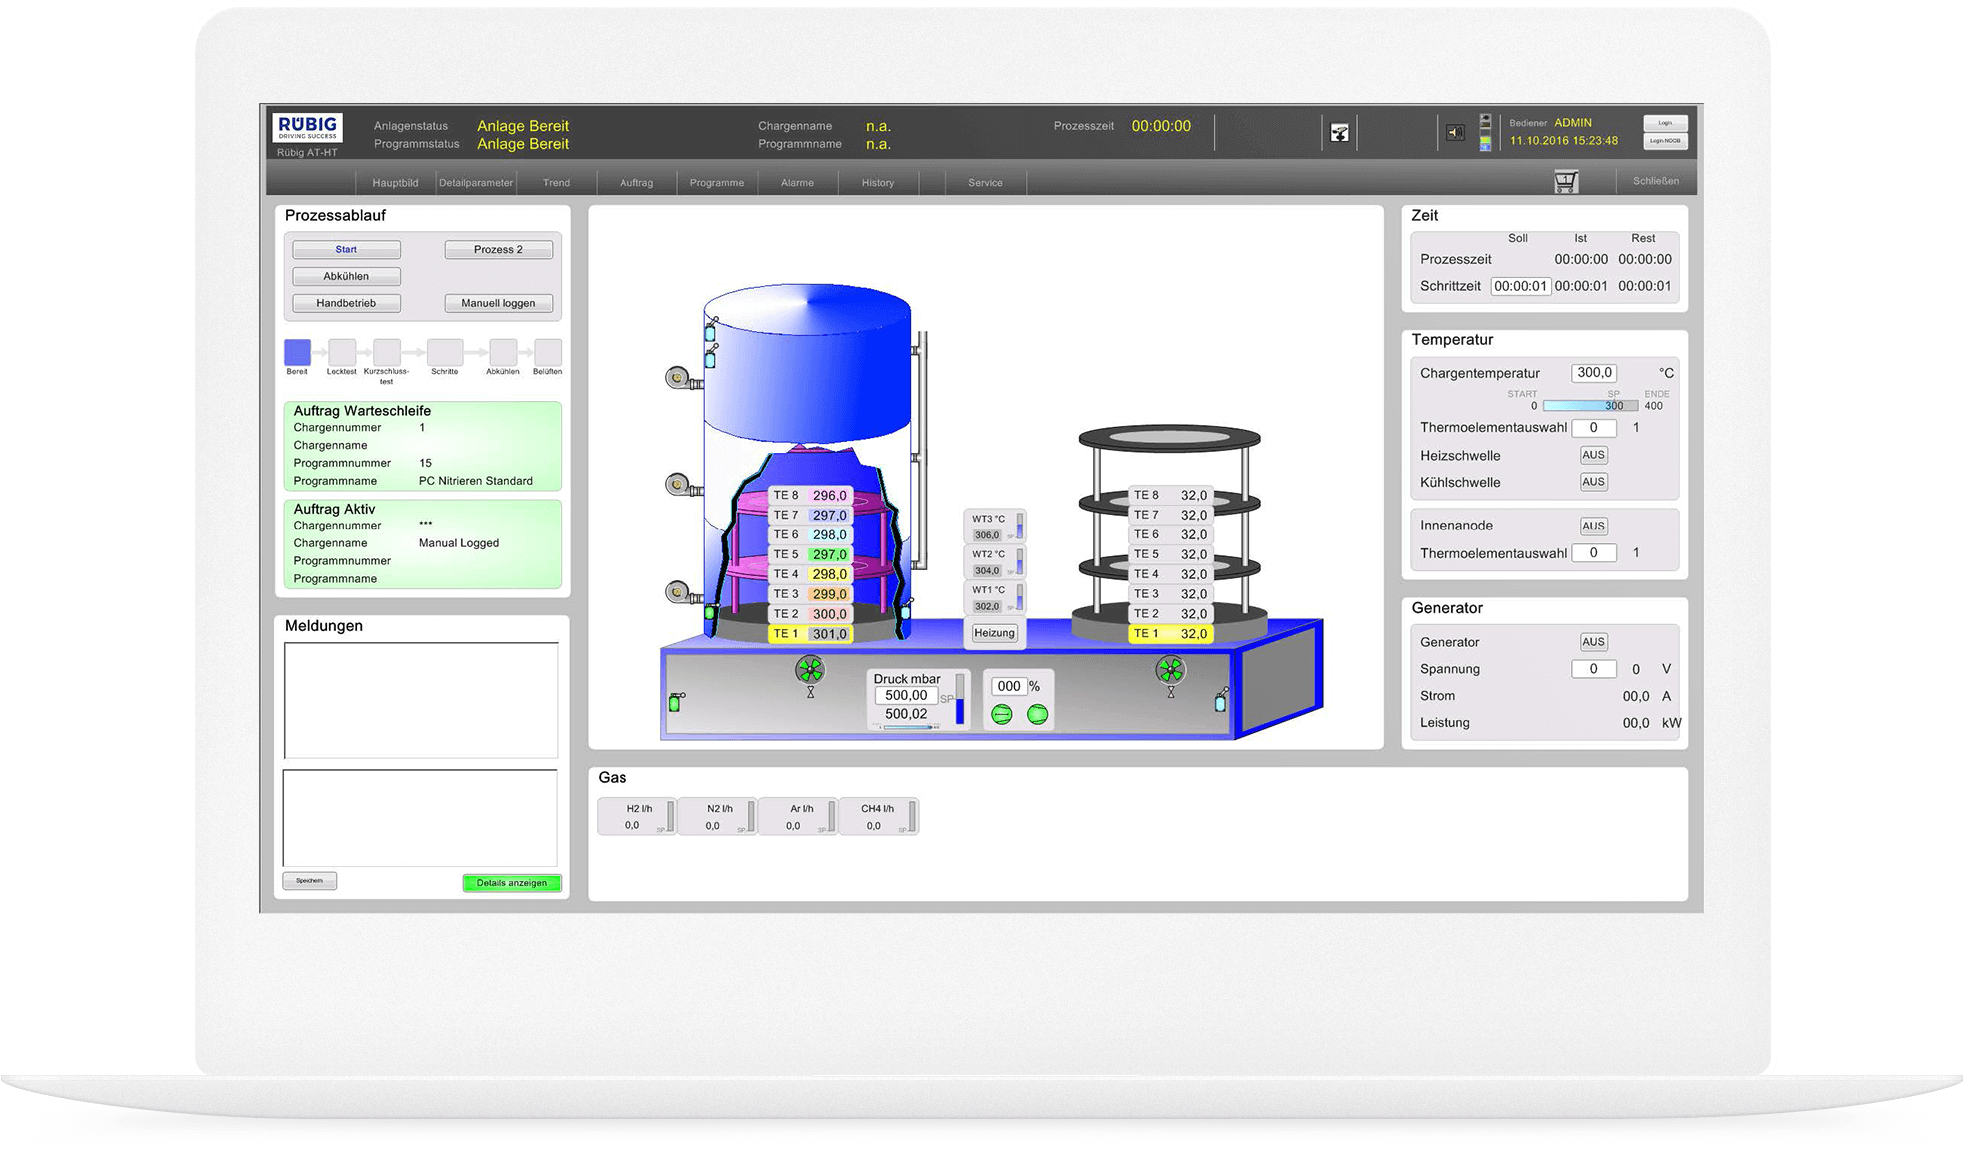 CIMPLICITY HMI/SCADA Provides Plant-Wide Visualization | Screenshot | GE DigitalCIMPLICITY HMI/SCADA Provides Plant-Wide Visualization | Screenshot | GE Digital